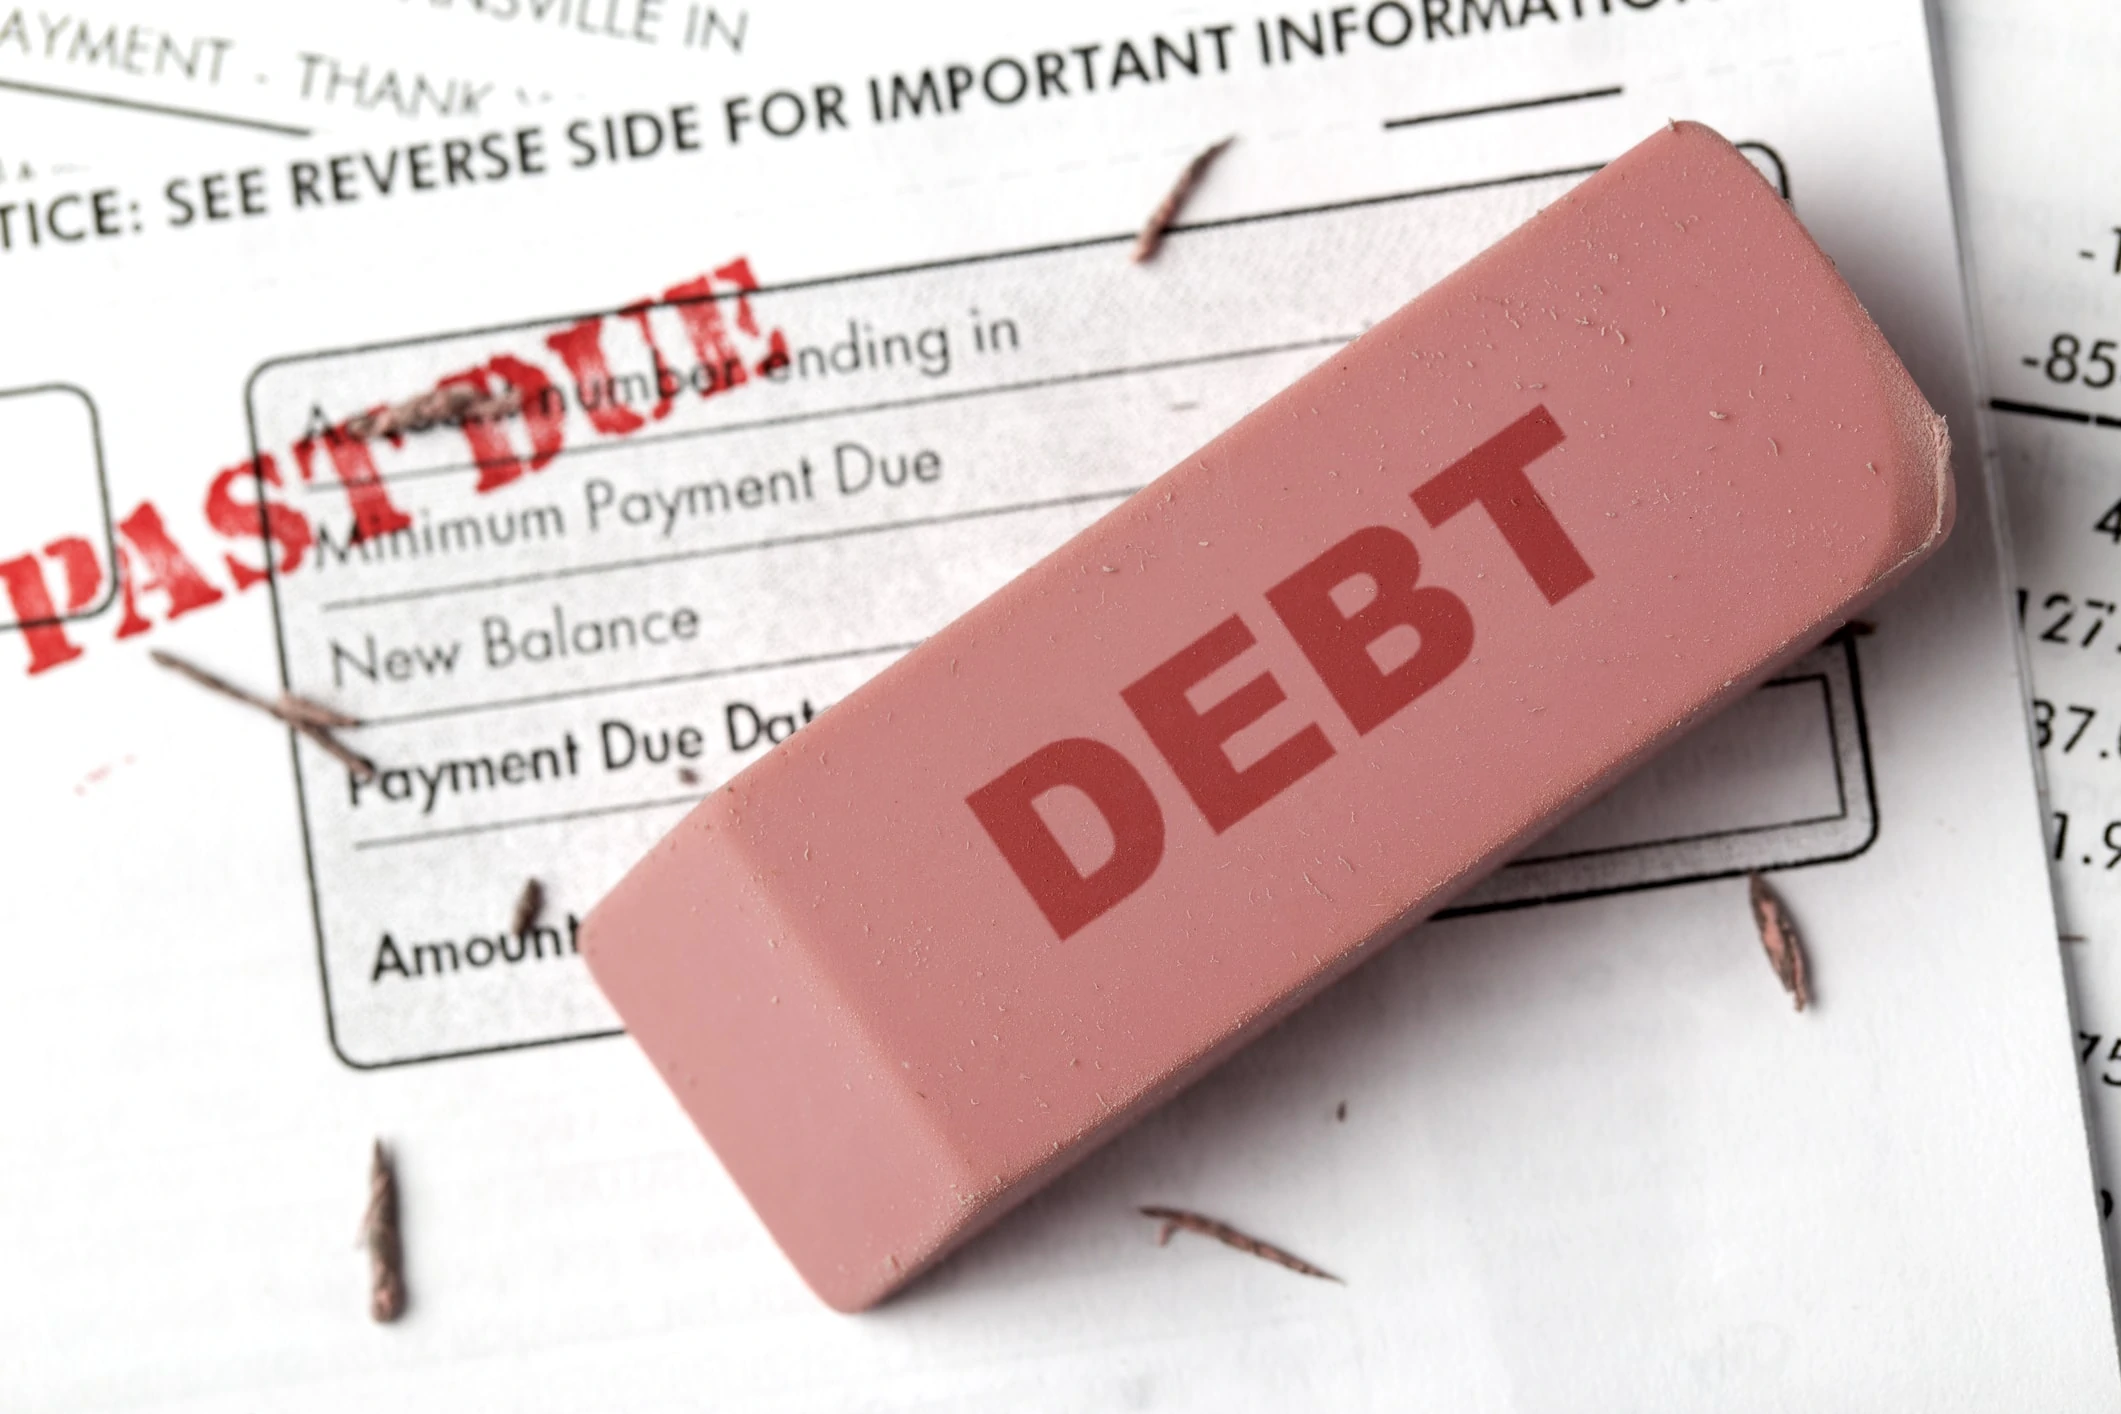 Debt relief concept. An eraser with the word "DEBT" on it erasing past due bills.